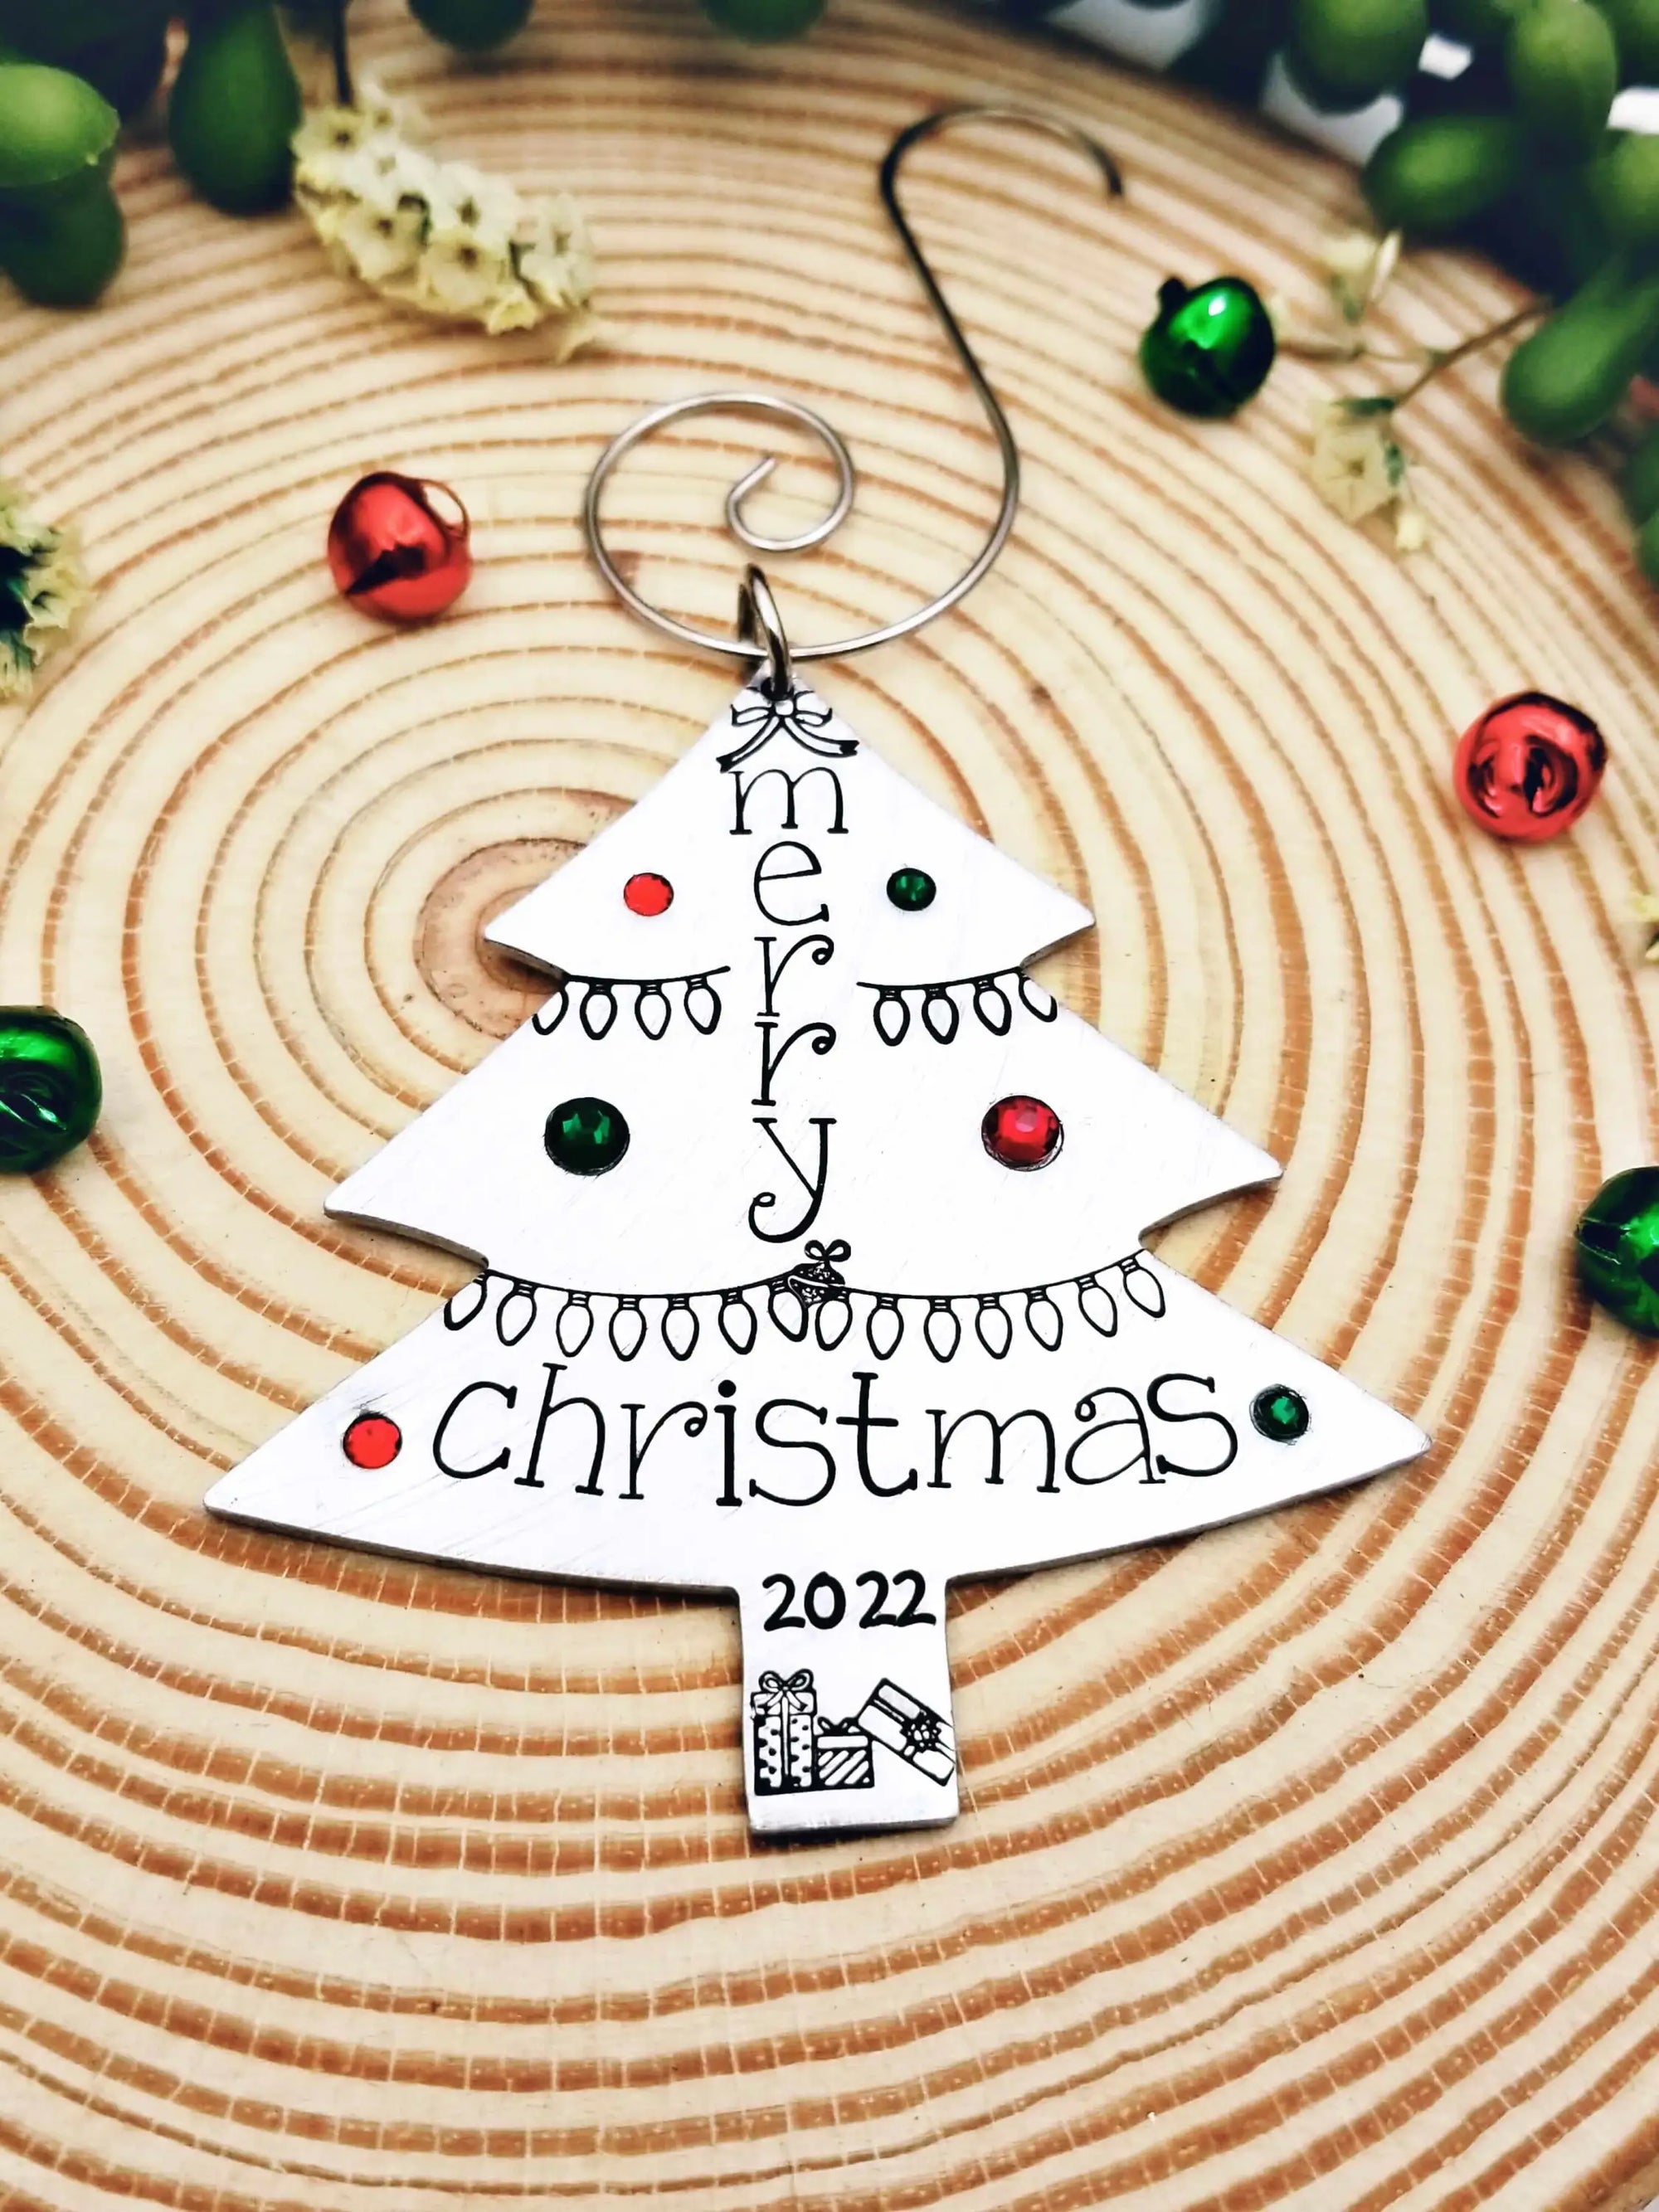 2022 Christmas Ornament, Handmade Ornament, Personalized Christmas Ornament, Funny Ornament Gift